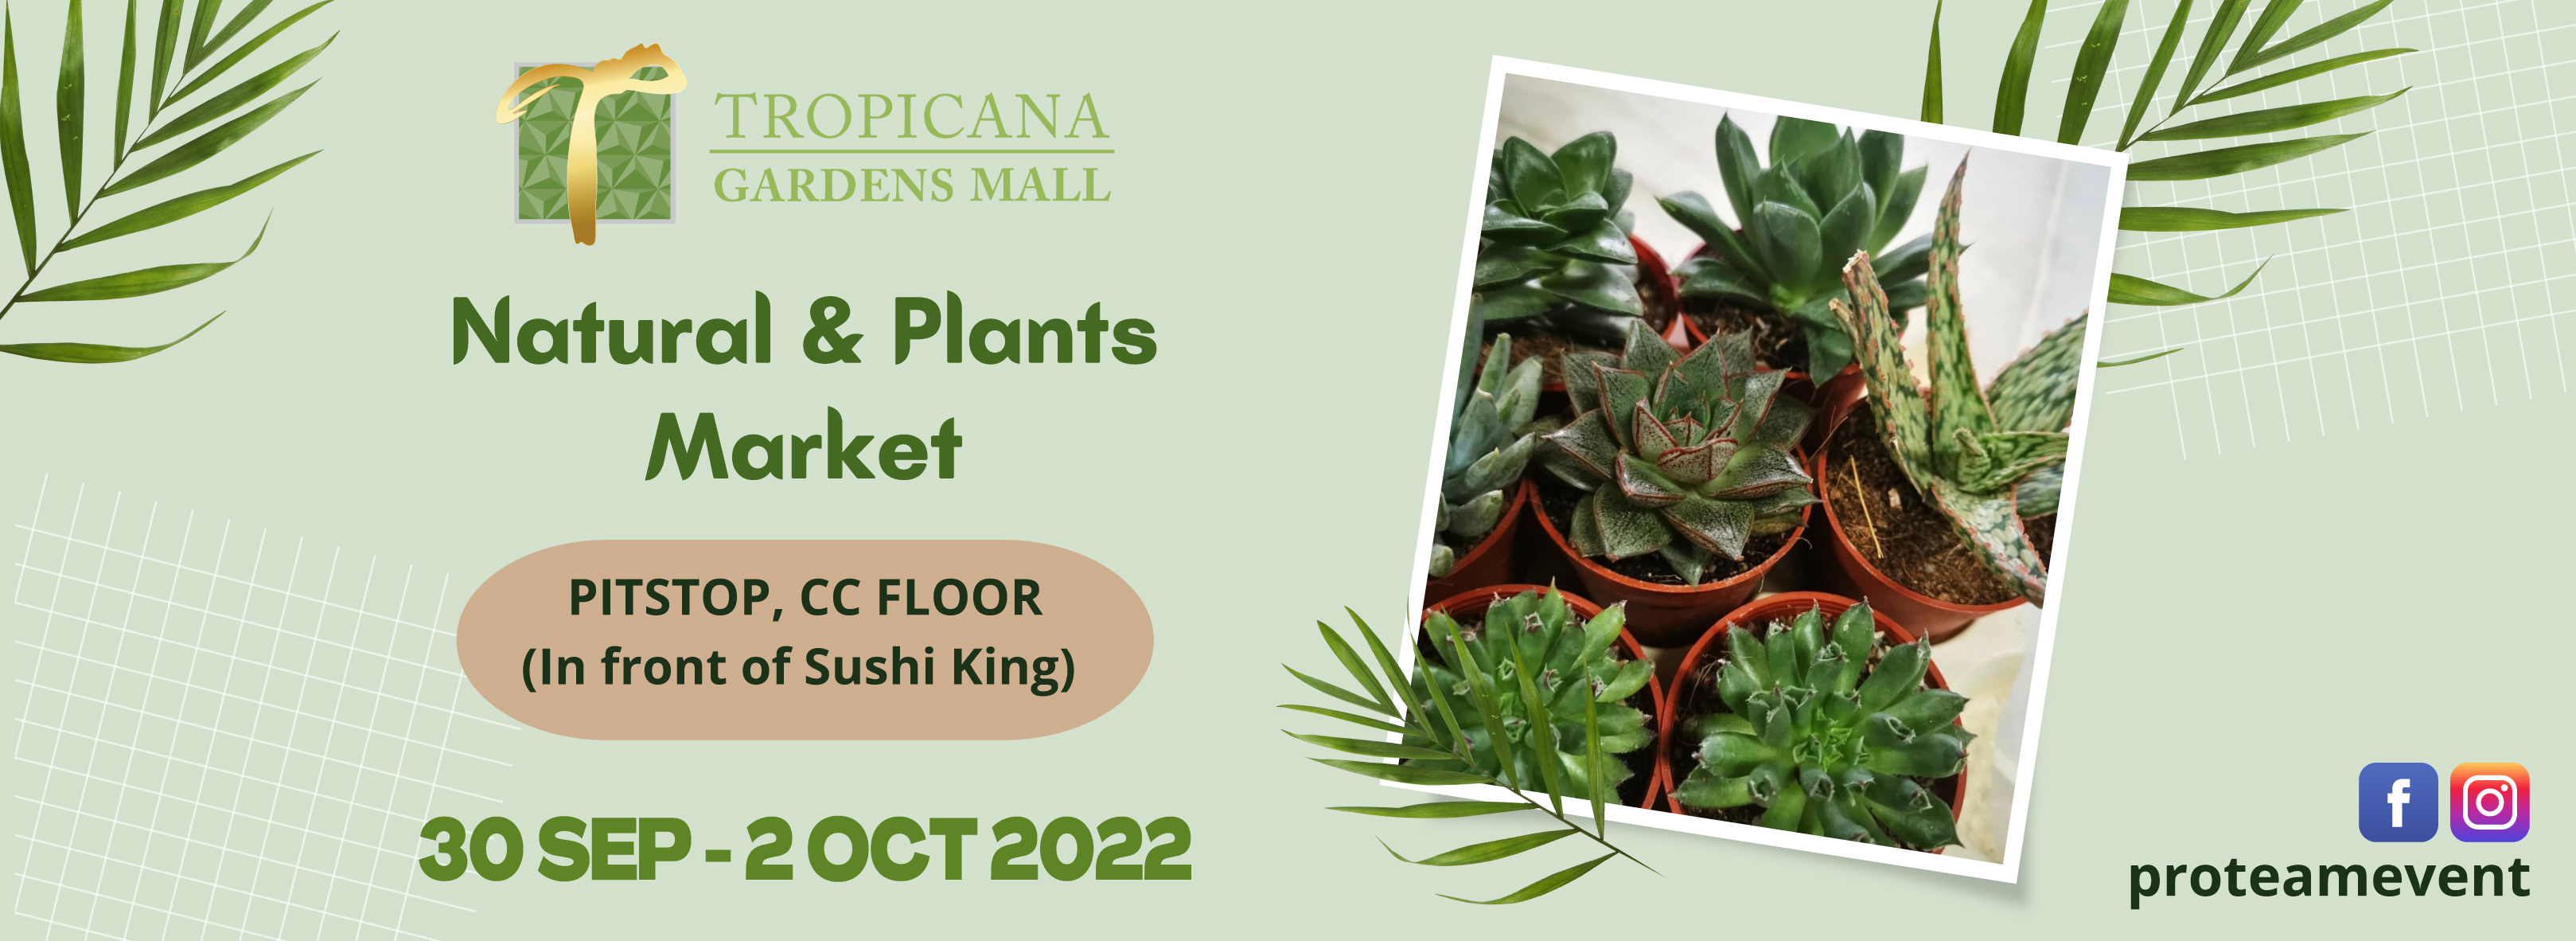 Tropicana Gardens Mall Natural & Plants Market